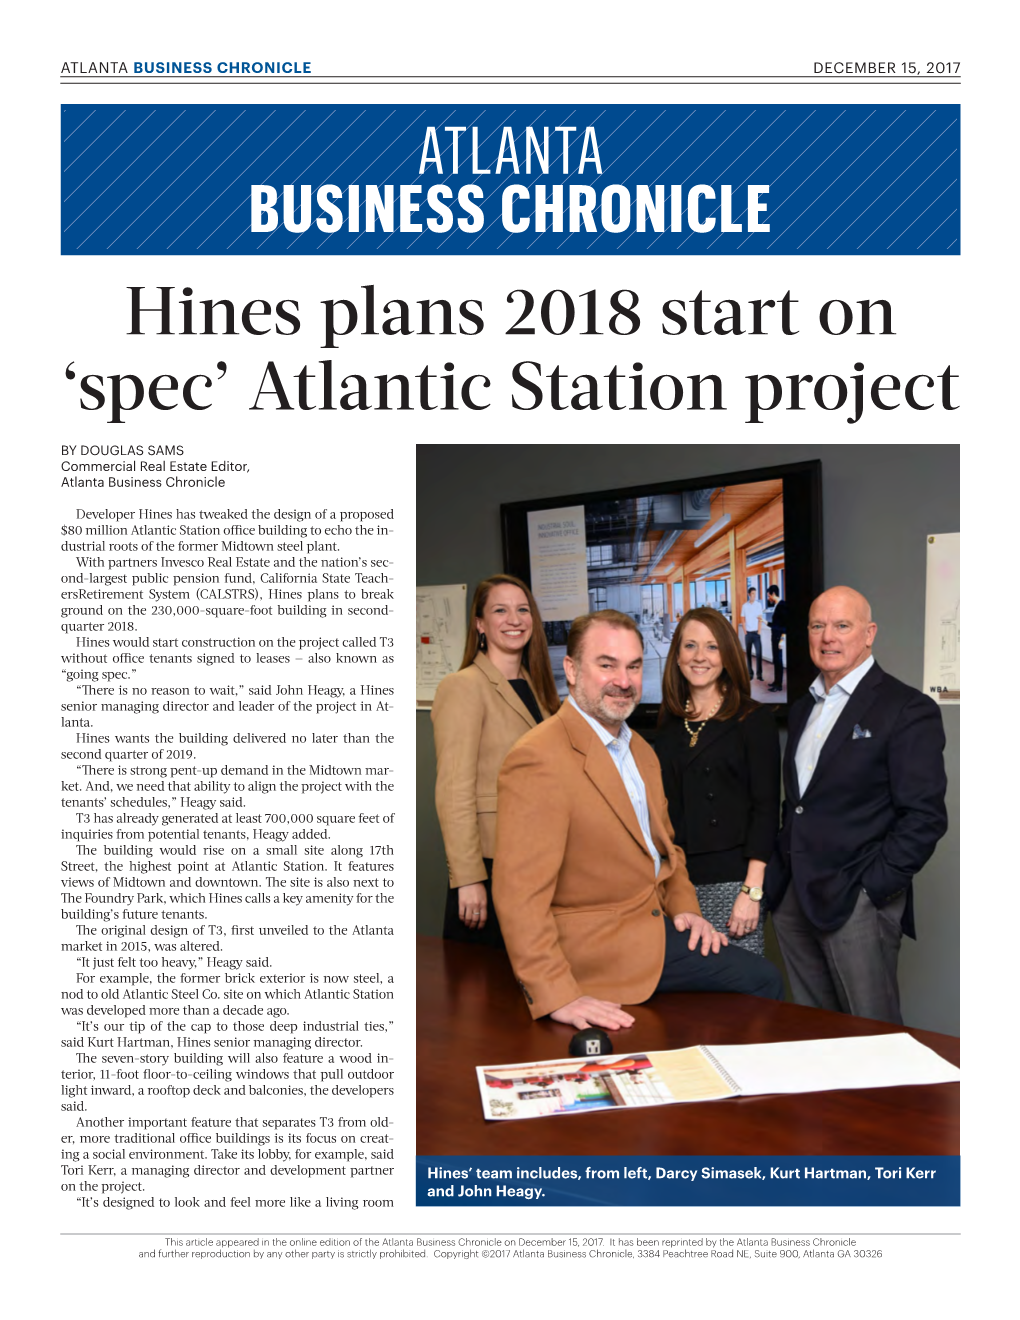 Hines Plans 2018 Start on 'Spec' Atlantic Station Project